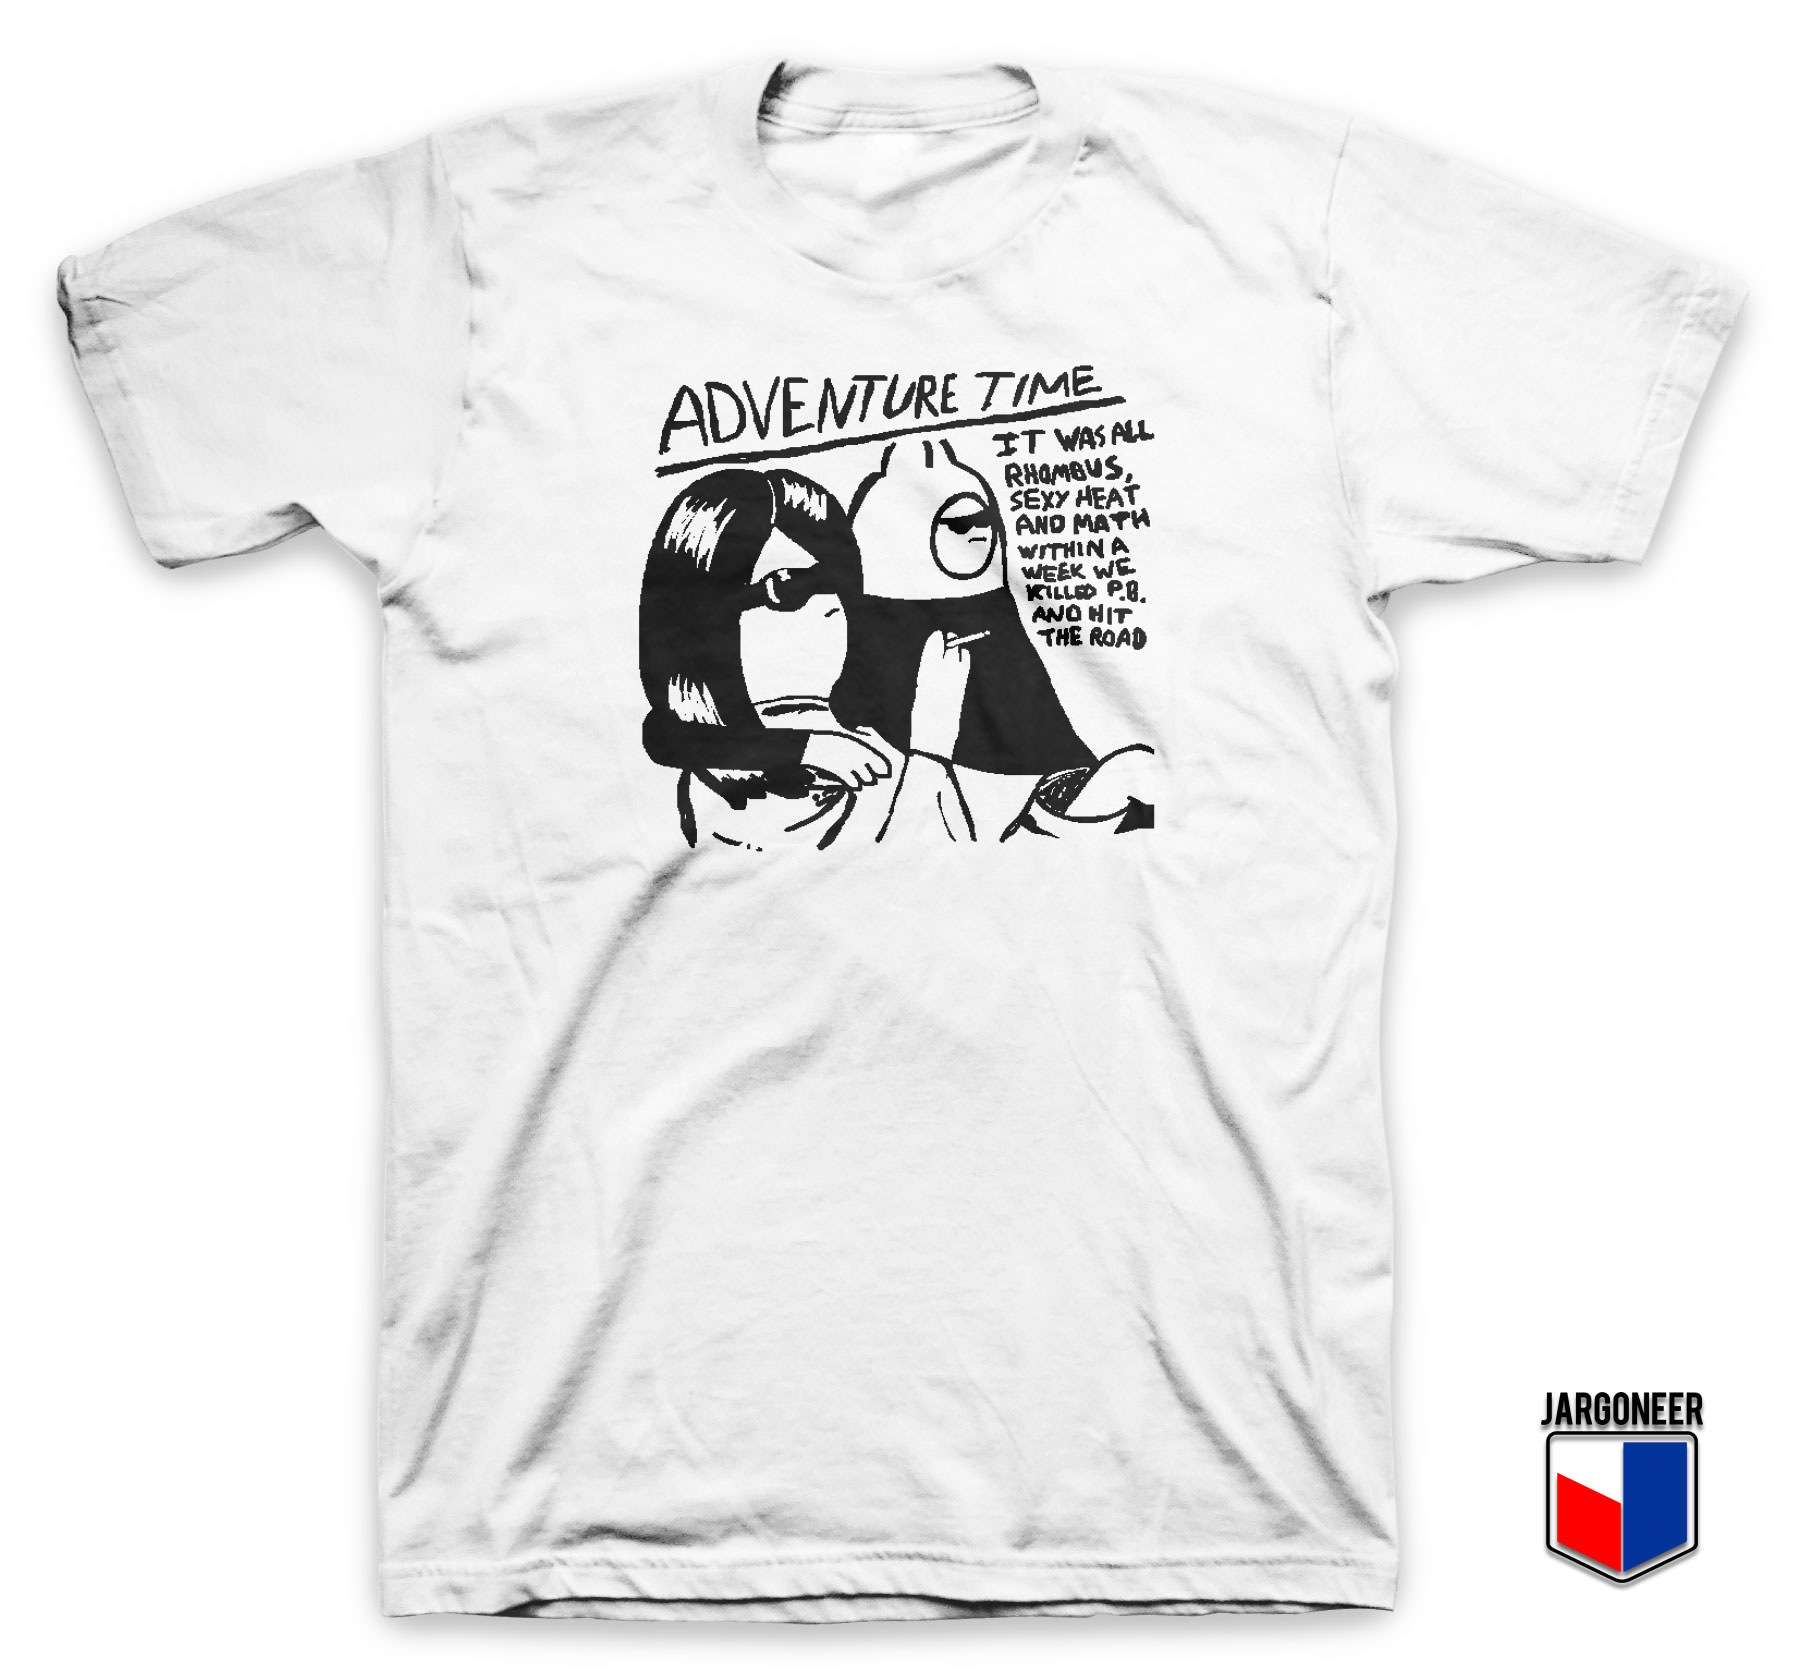 Adventure Time Sonic Youth Parody T Shirt - Shop Unique Graphic Cool Shirt Designs